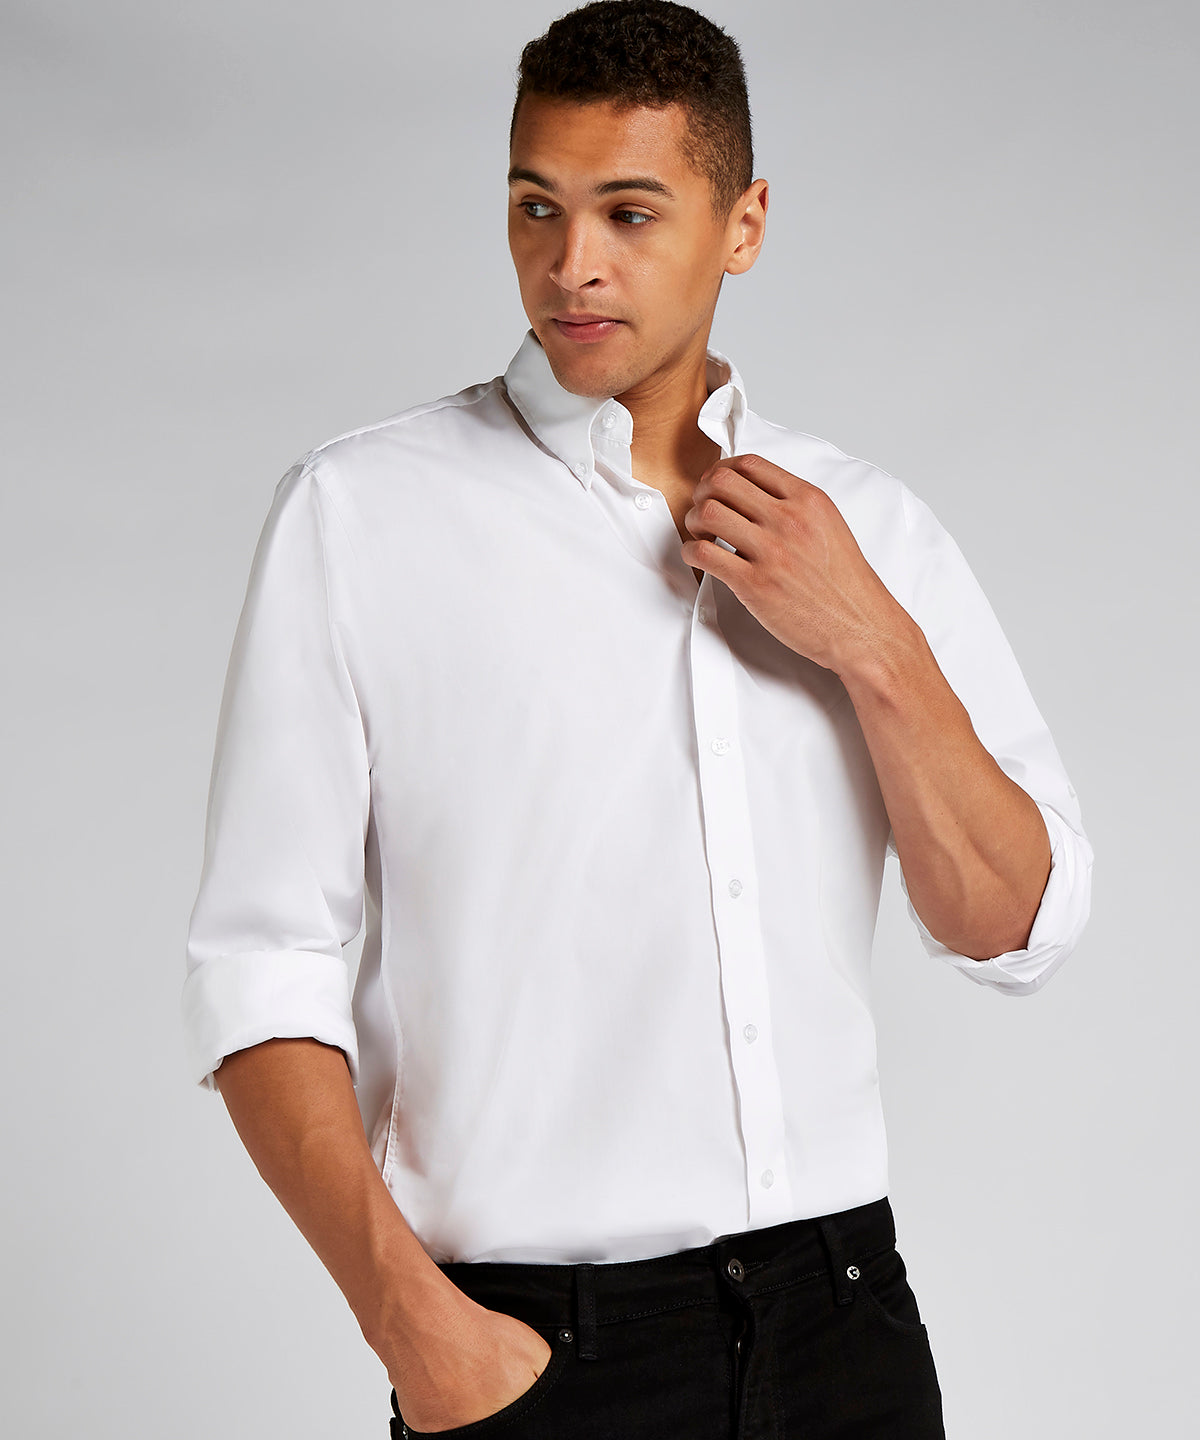 Bolir - Workforce Shirt Long-sleeved (classic Fit)